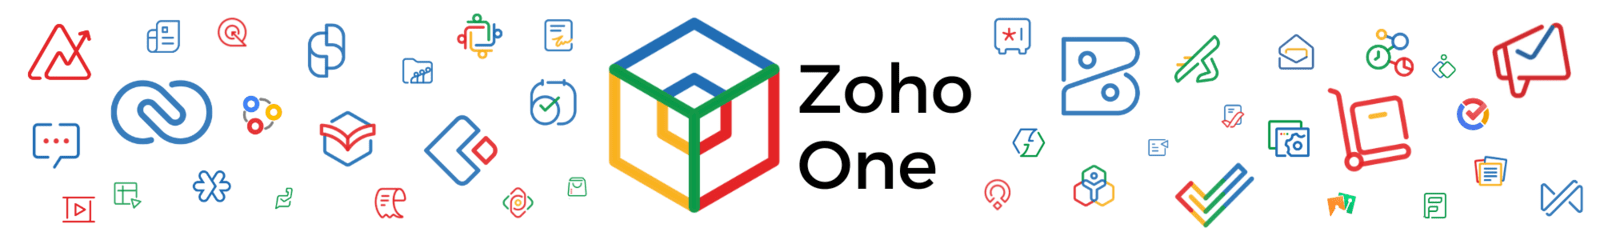 Zoho One Apps